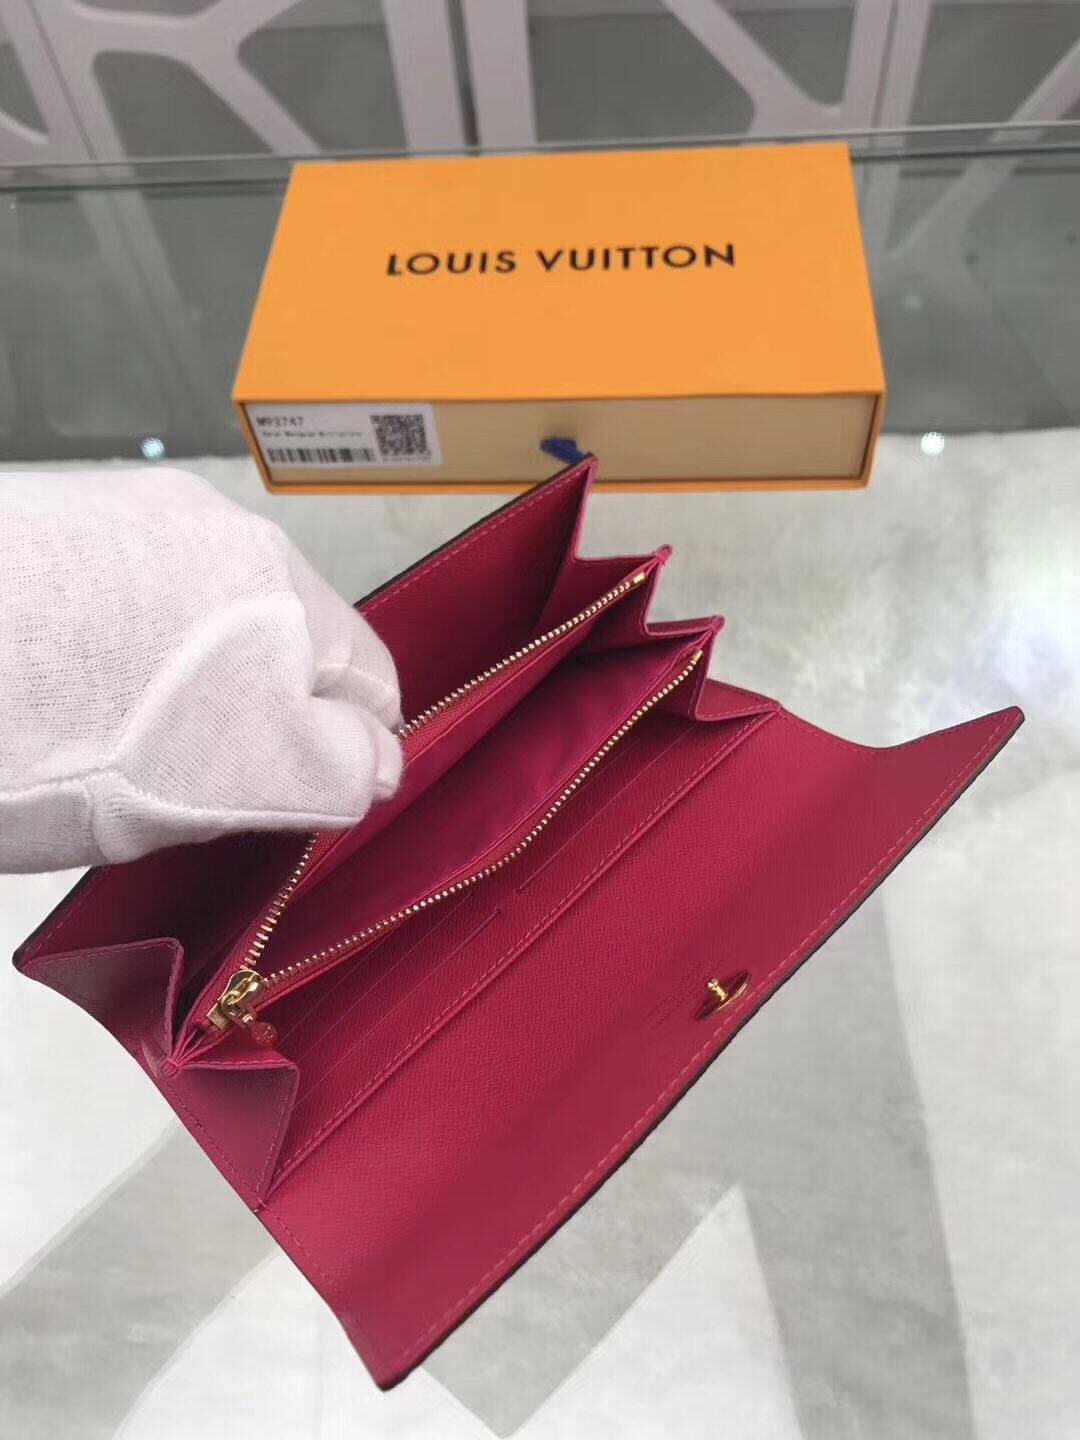 Louis Vuitton Sarah Wallet Review 2019